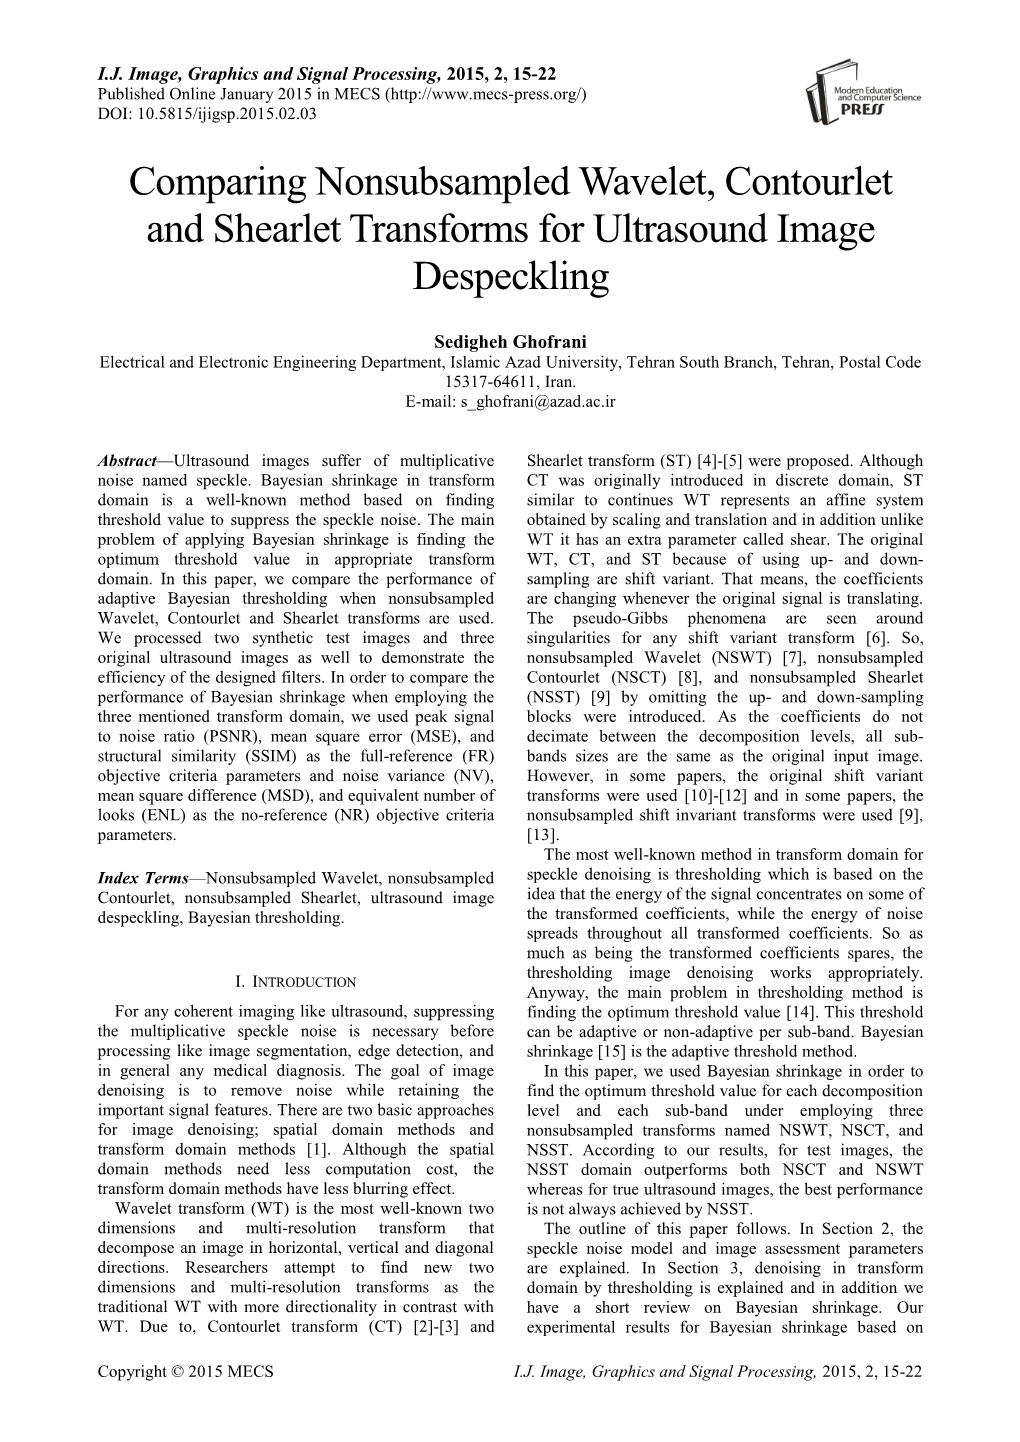 Comparing Nonsubsampled Wavelet, Contourlet and Shearlet Transforms for Ultrasound Image Despeckling